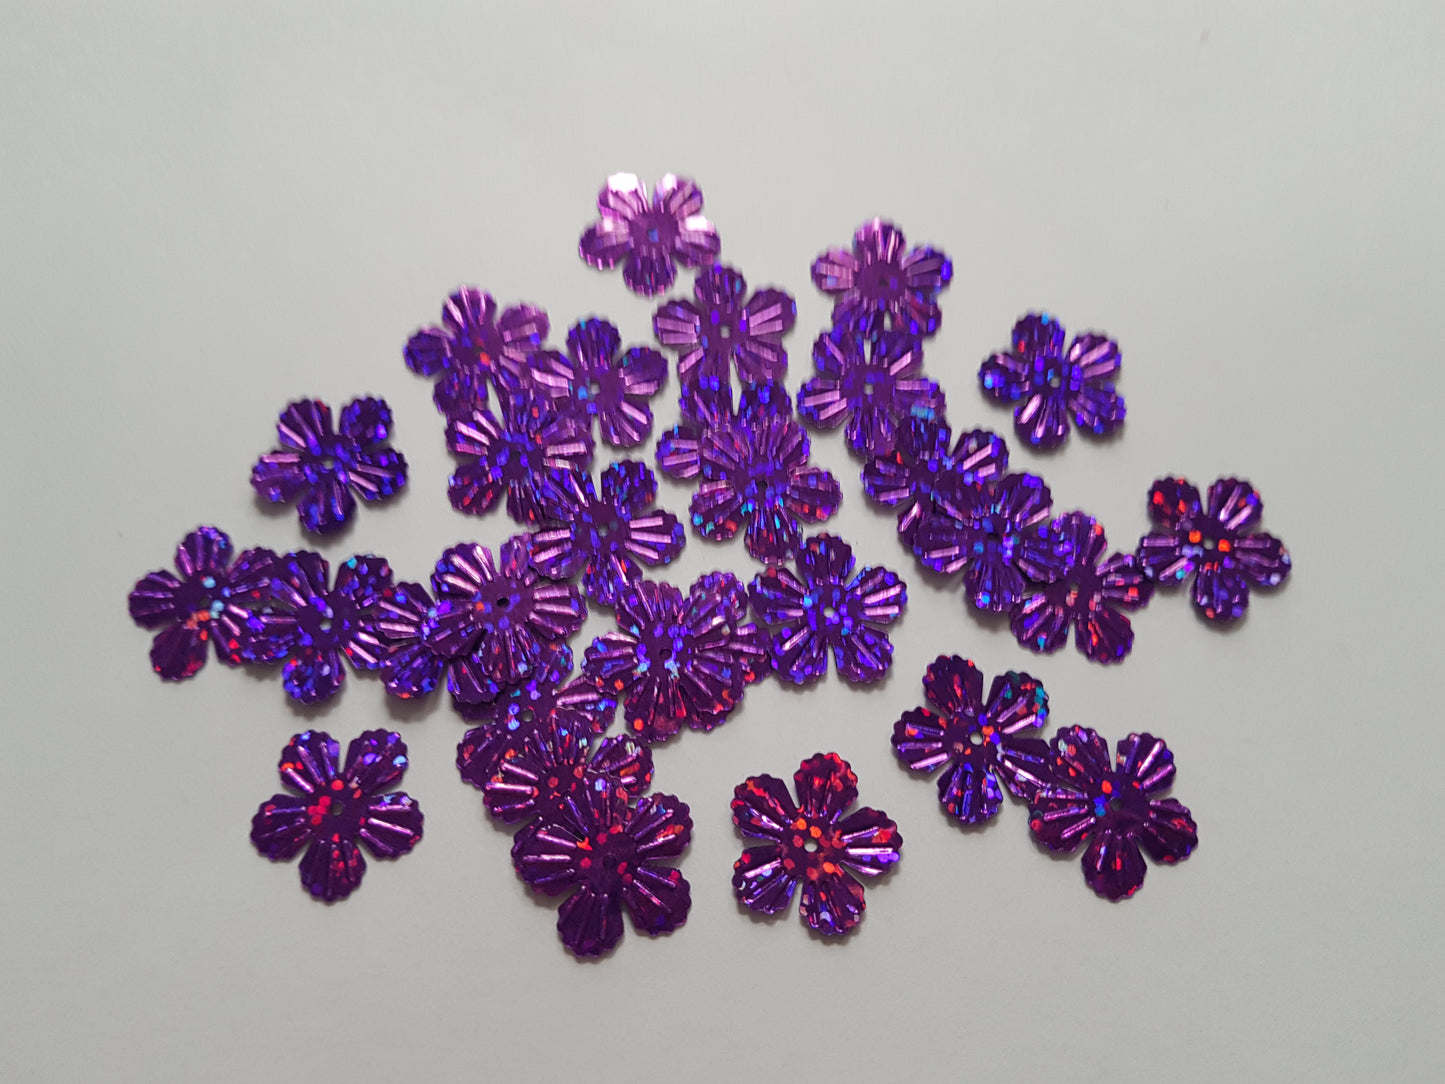 19mm holographic flower sequins - purple 